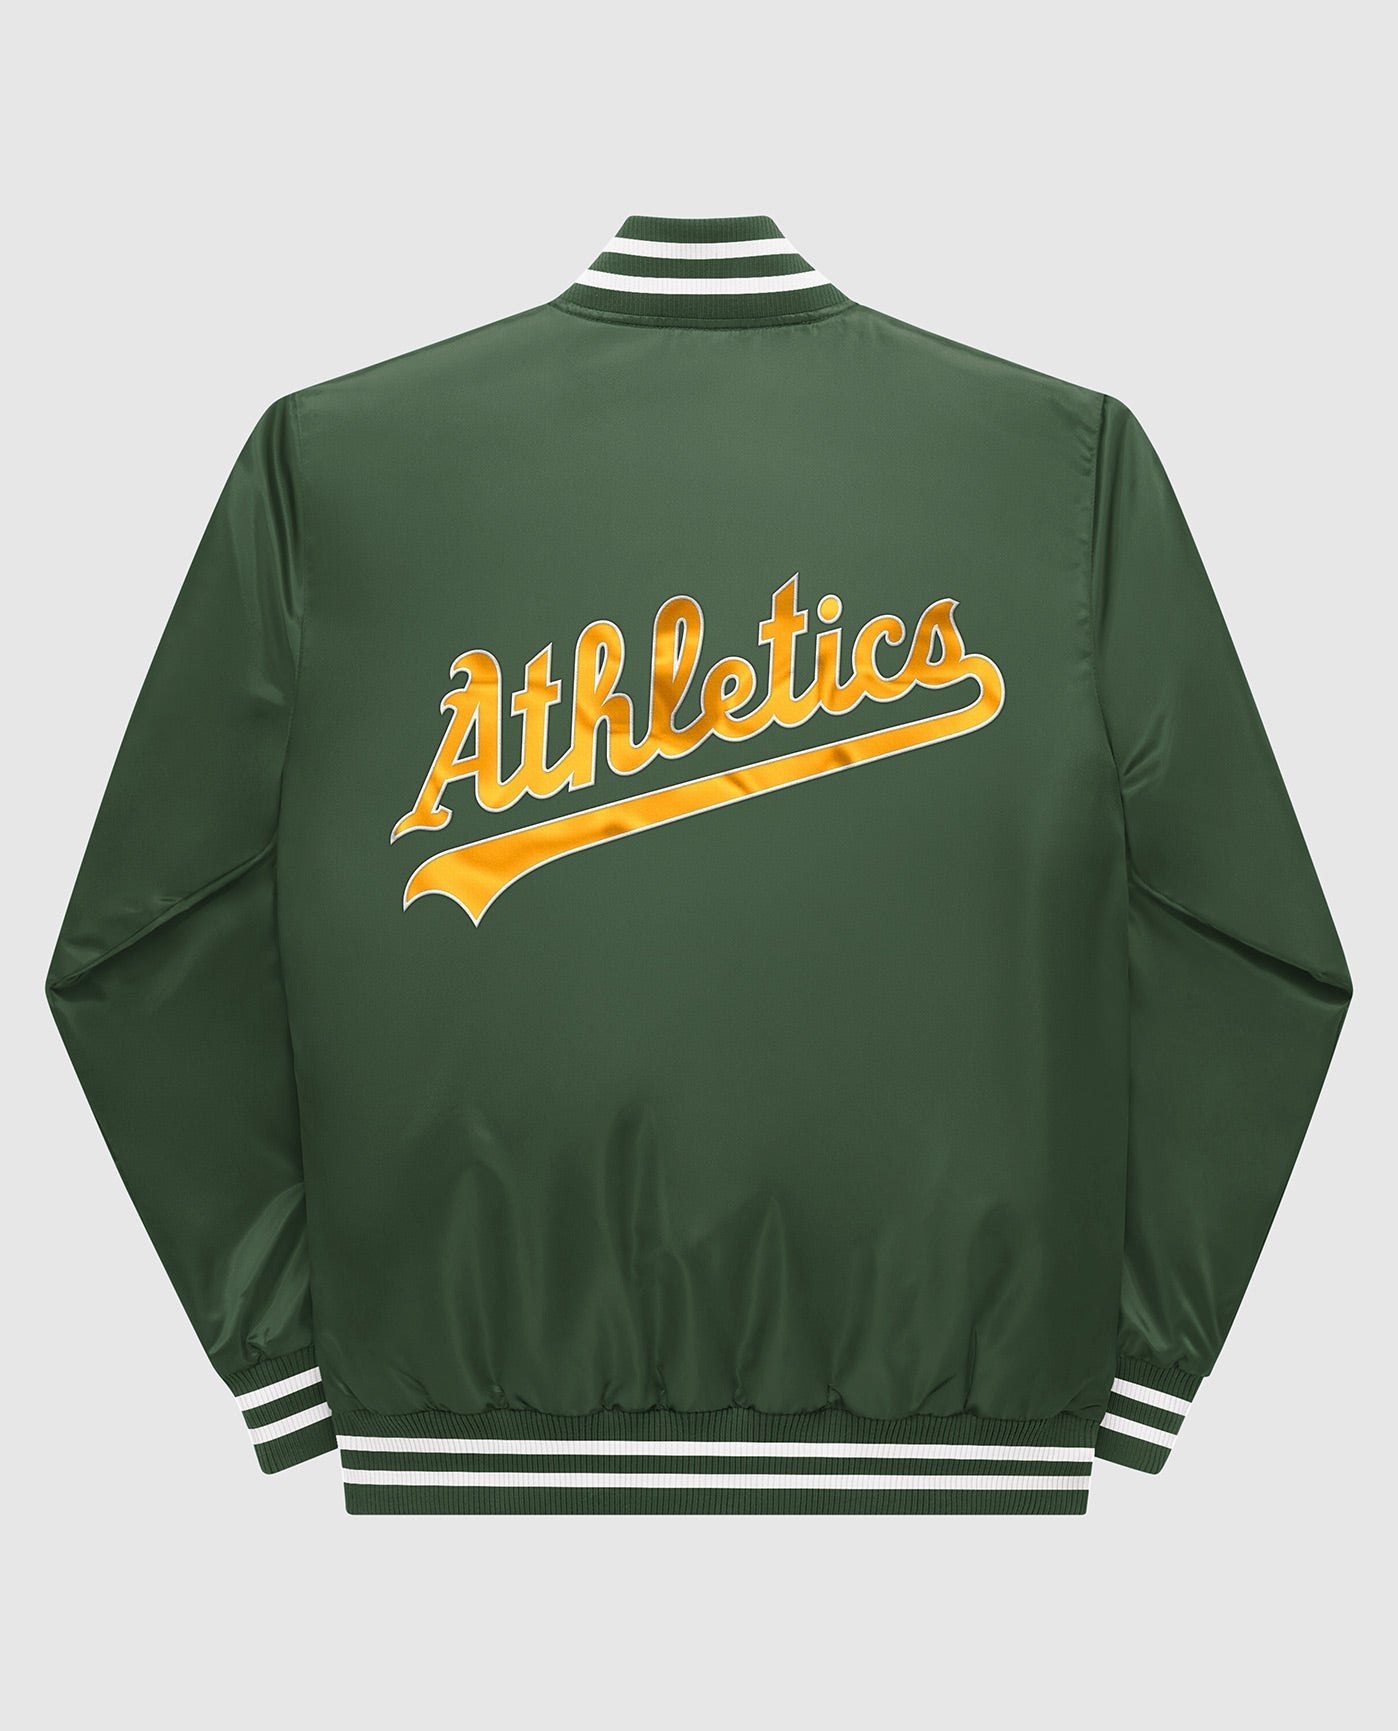 Men's Fanatics Branded Green/Gold Oakland Athletics Polo Combo Pack